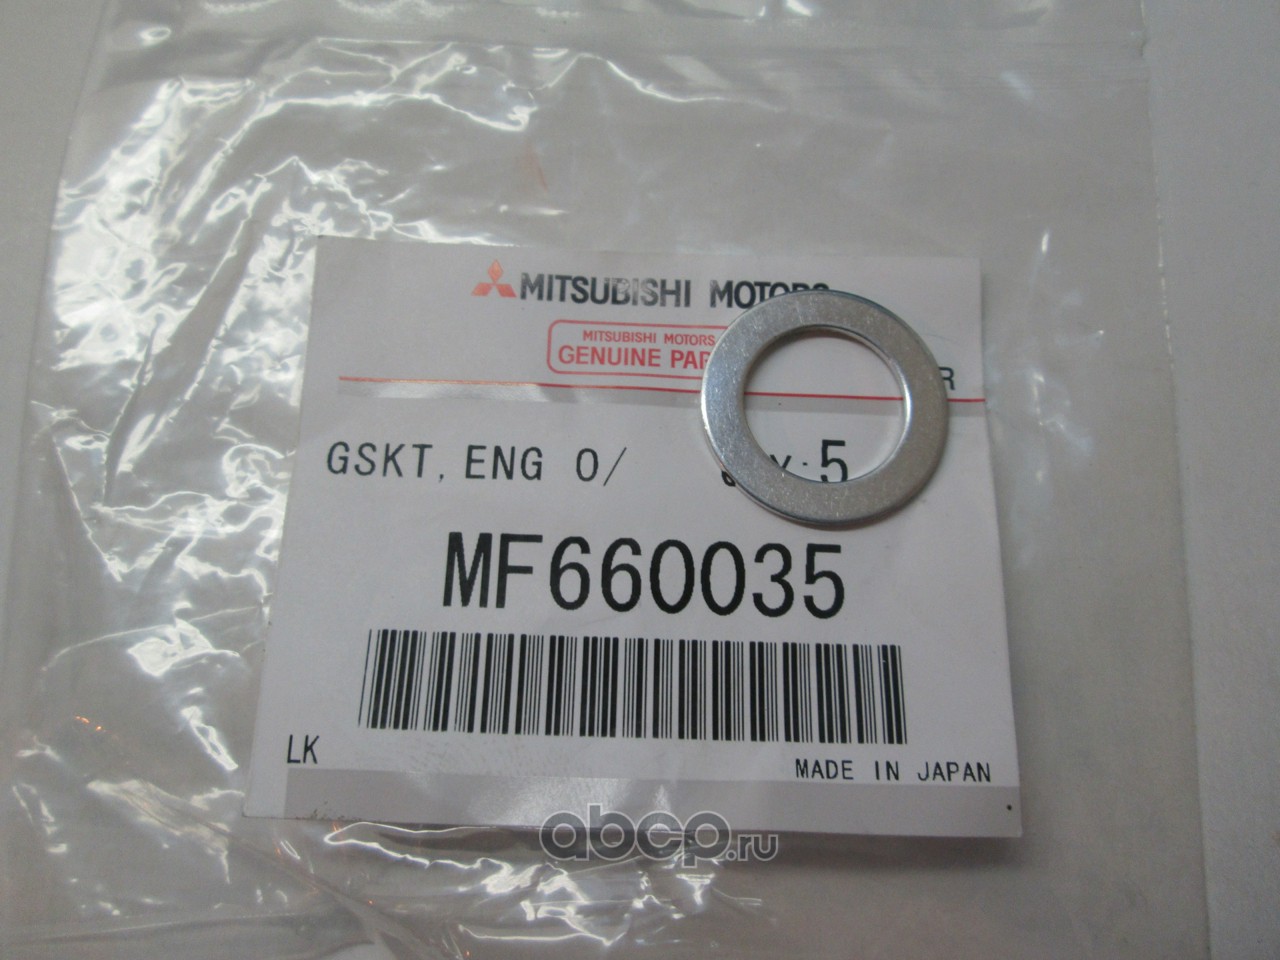 mf660035 Прокладка сливной пробки MITSUBISHI MF660035 — фото 255x150